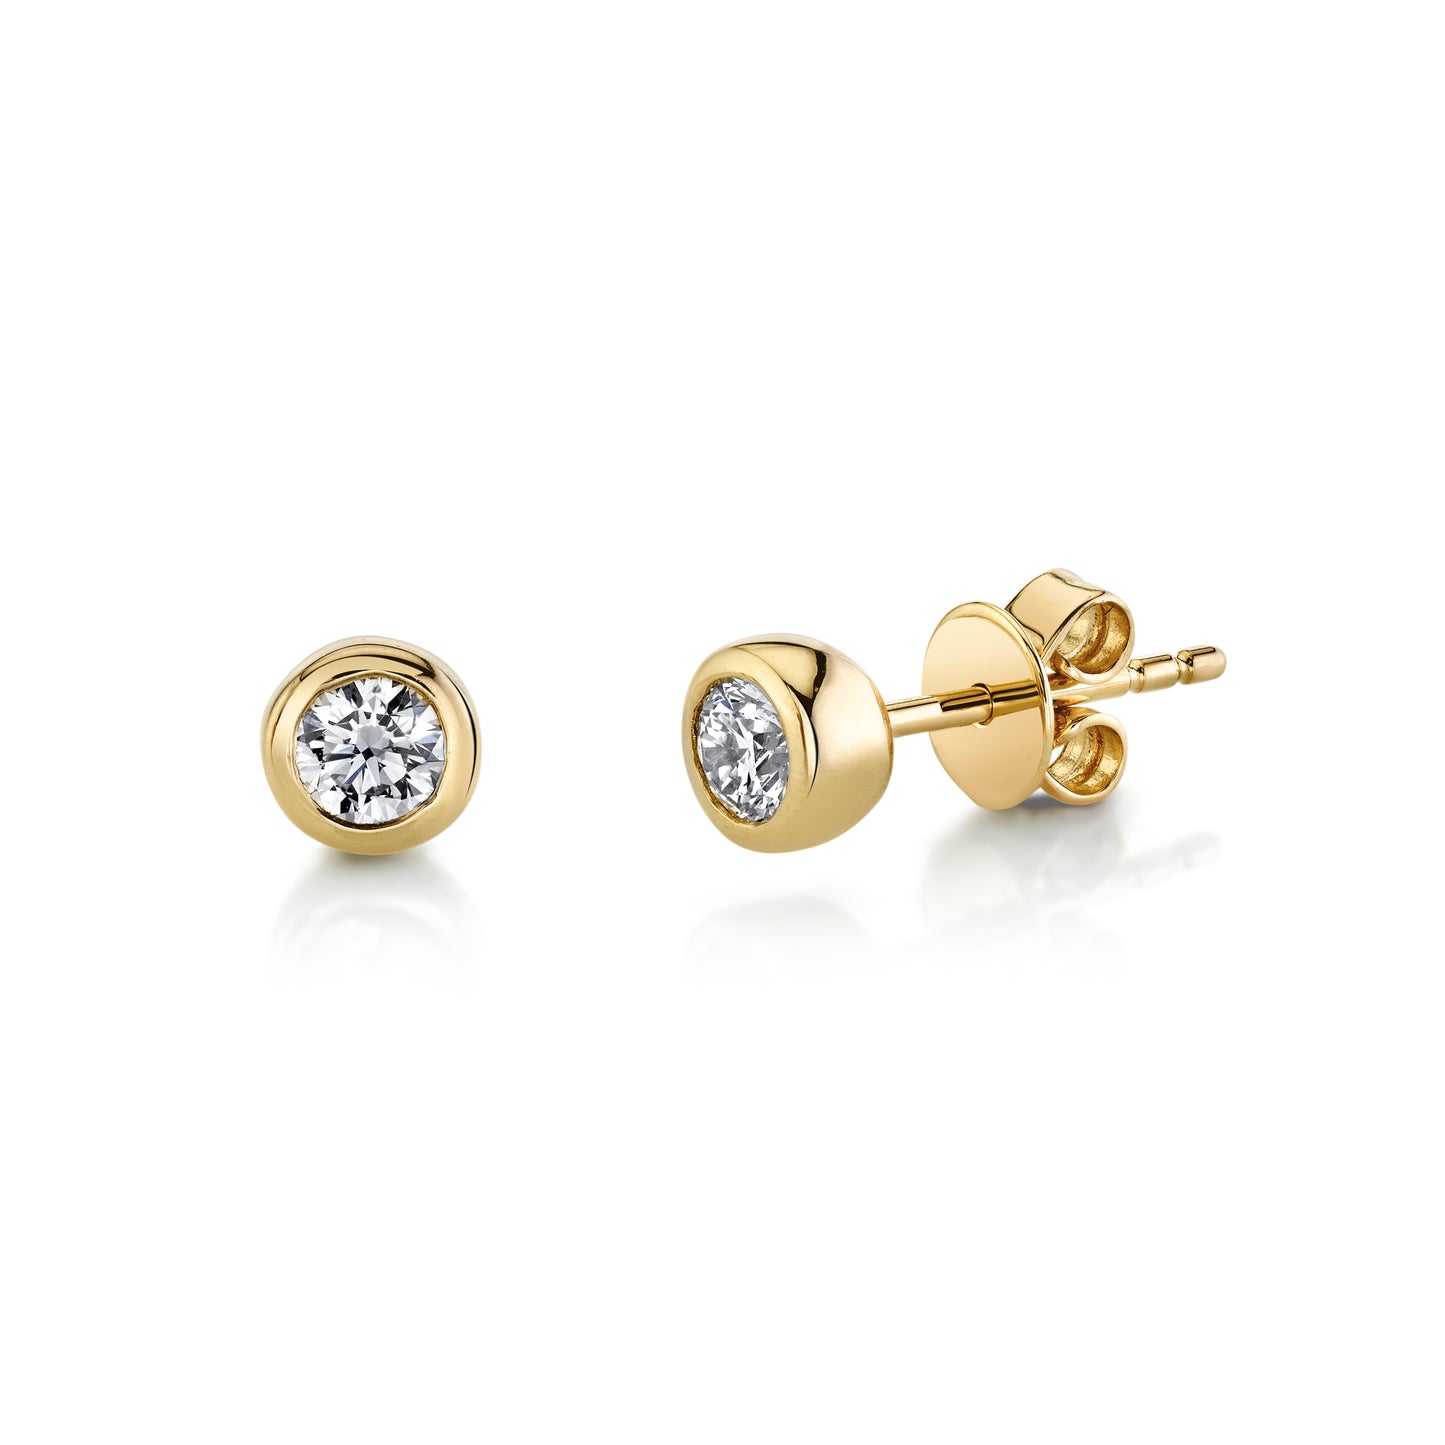 Bezel Set Solitaire Round Diamond Stud Earrings in 14K Gold